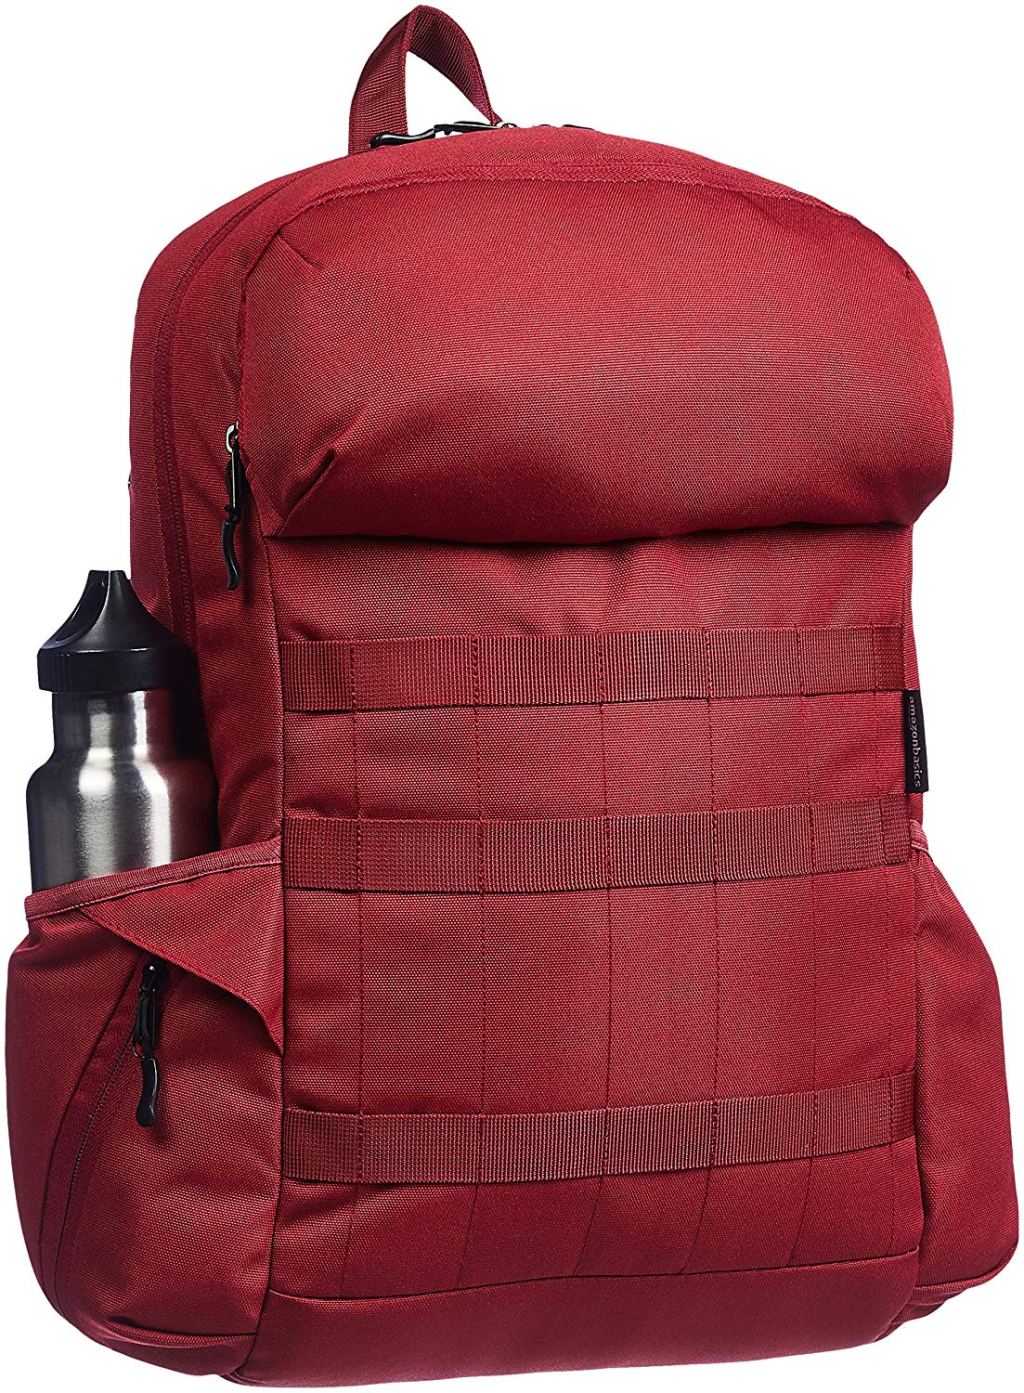 AmazonBasics Red Backpack